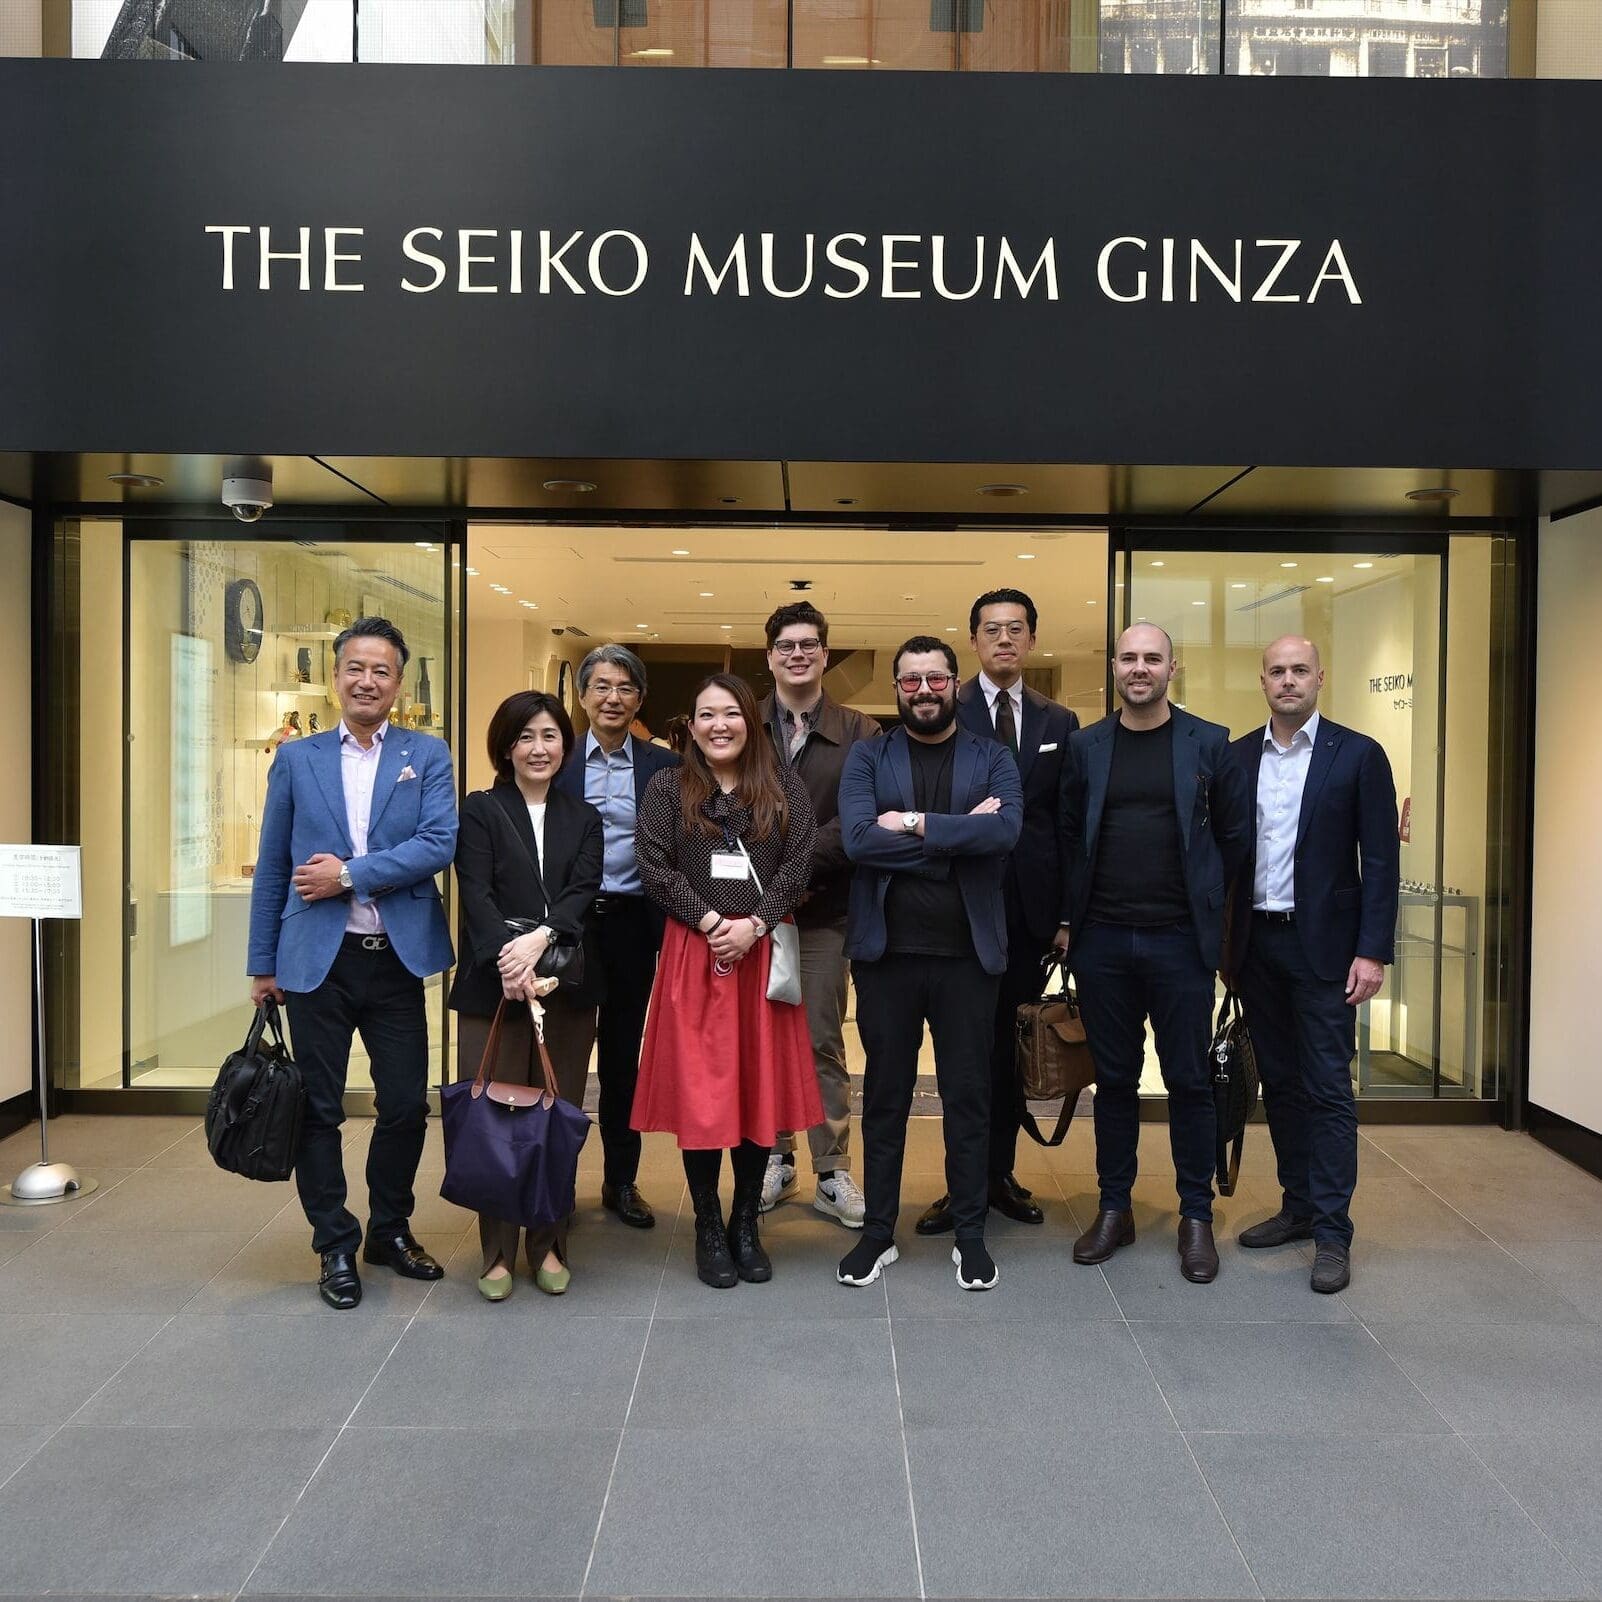 Grand Seiko Manufacture Tour Part 2: The Seiko Museum in Ginza